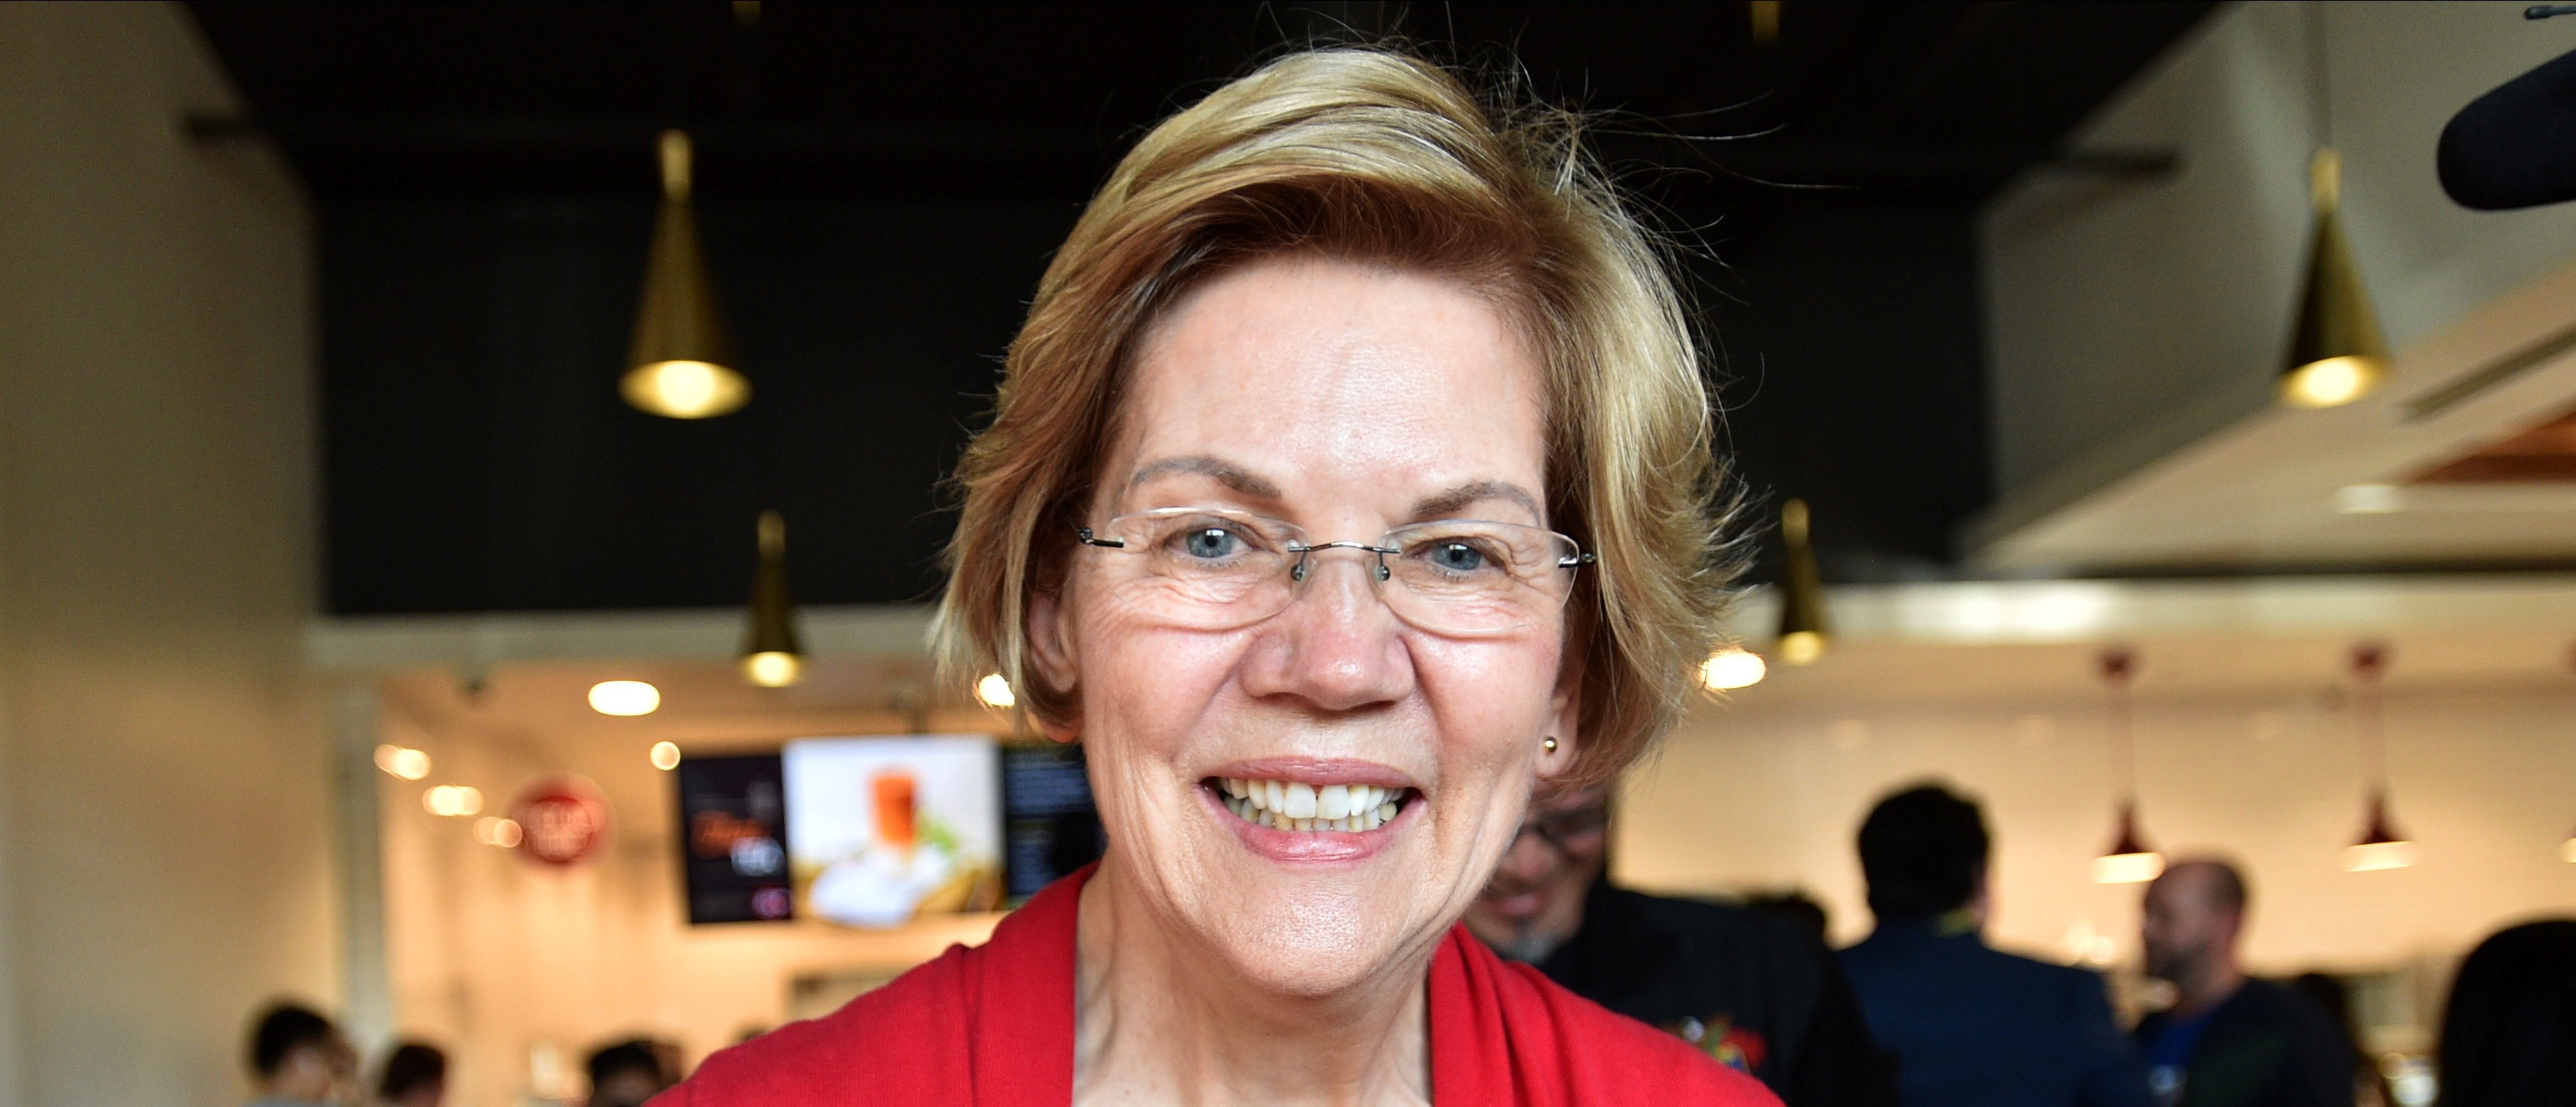 Democratic U.S. presidential candidate Senator Elizabeth Warren greets people during a campaign stop in Las Vegas